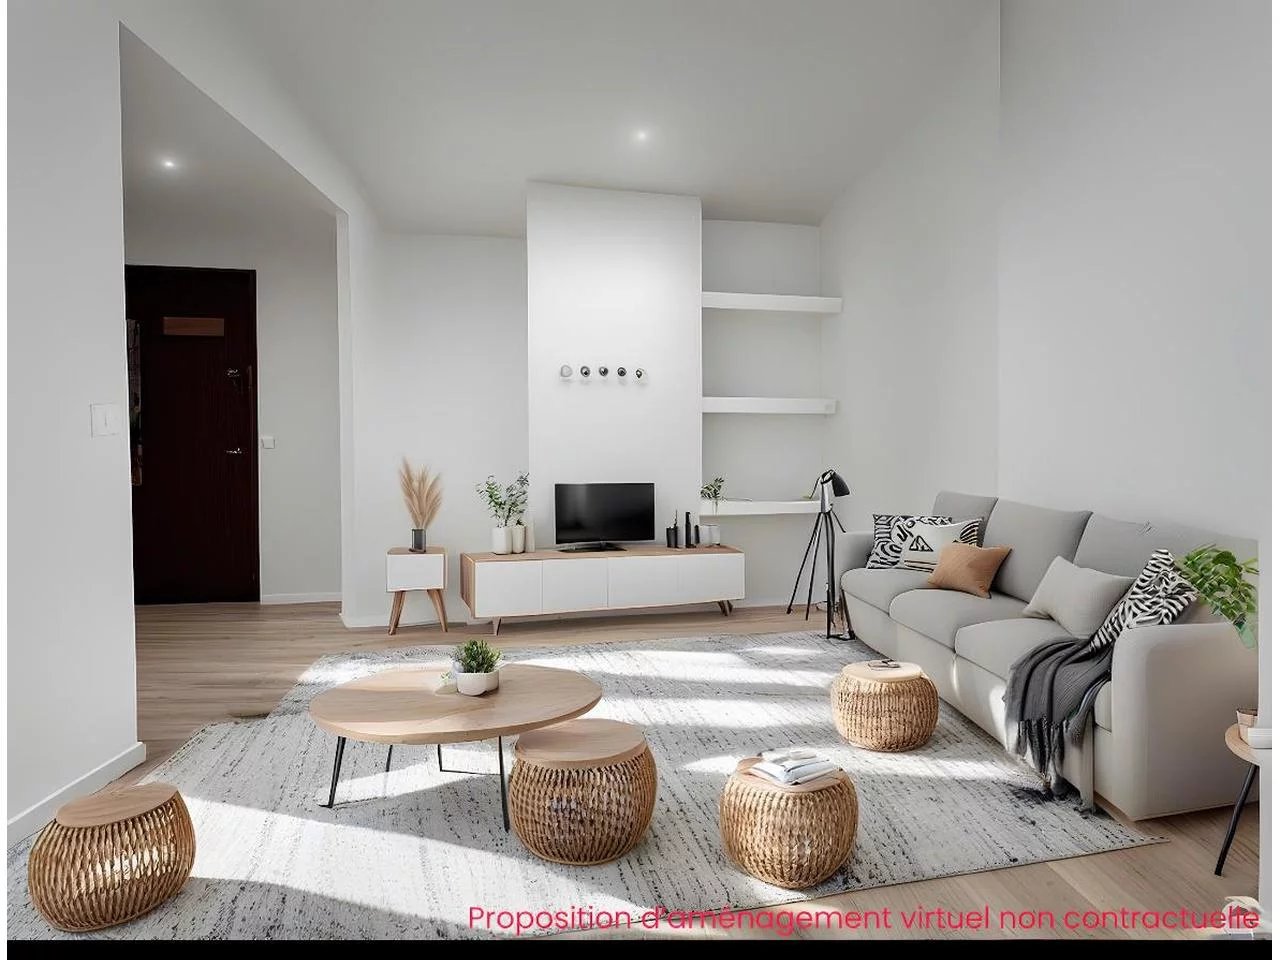 Appartement  3 Locali 47.88m2  In vendita   260 000 €